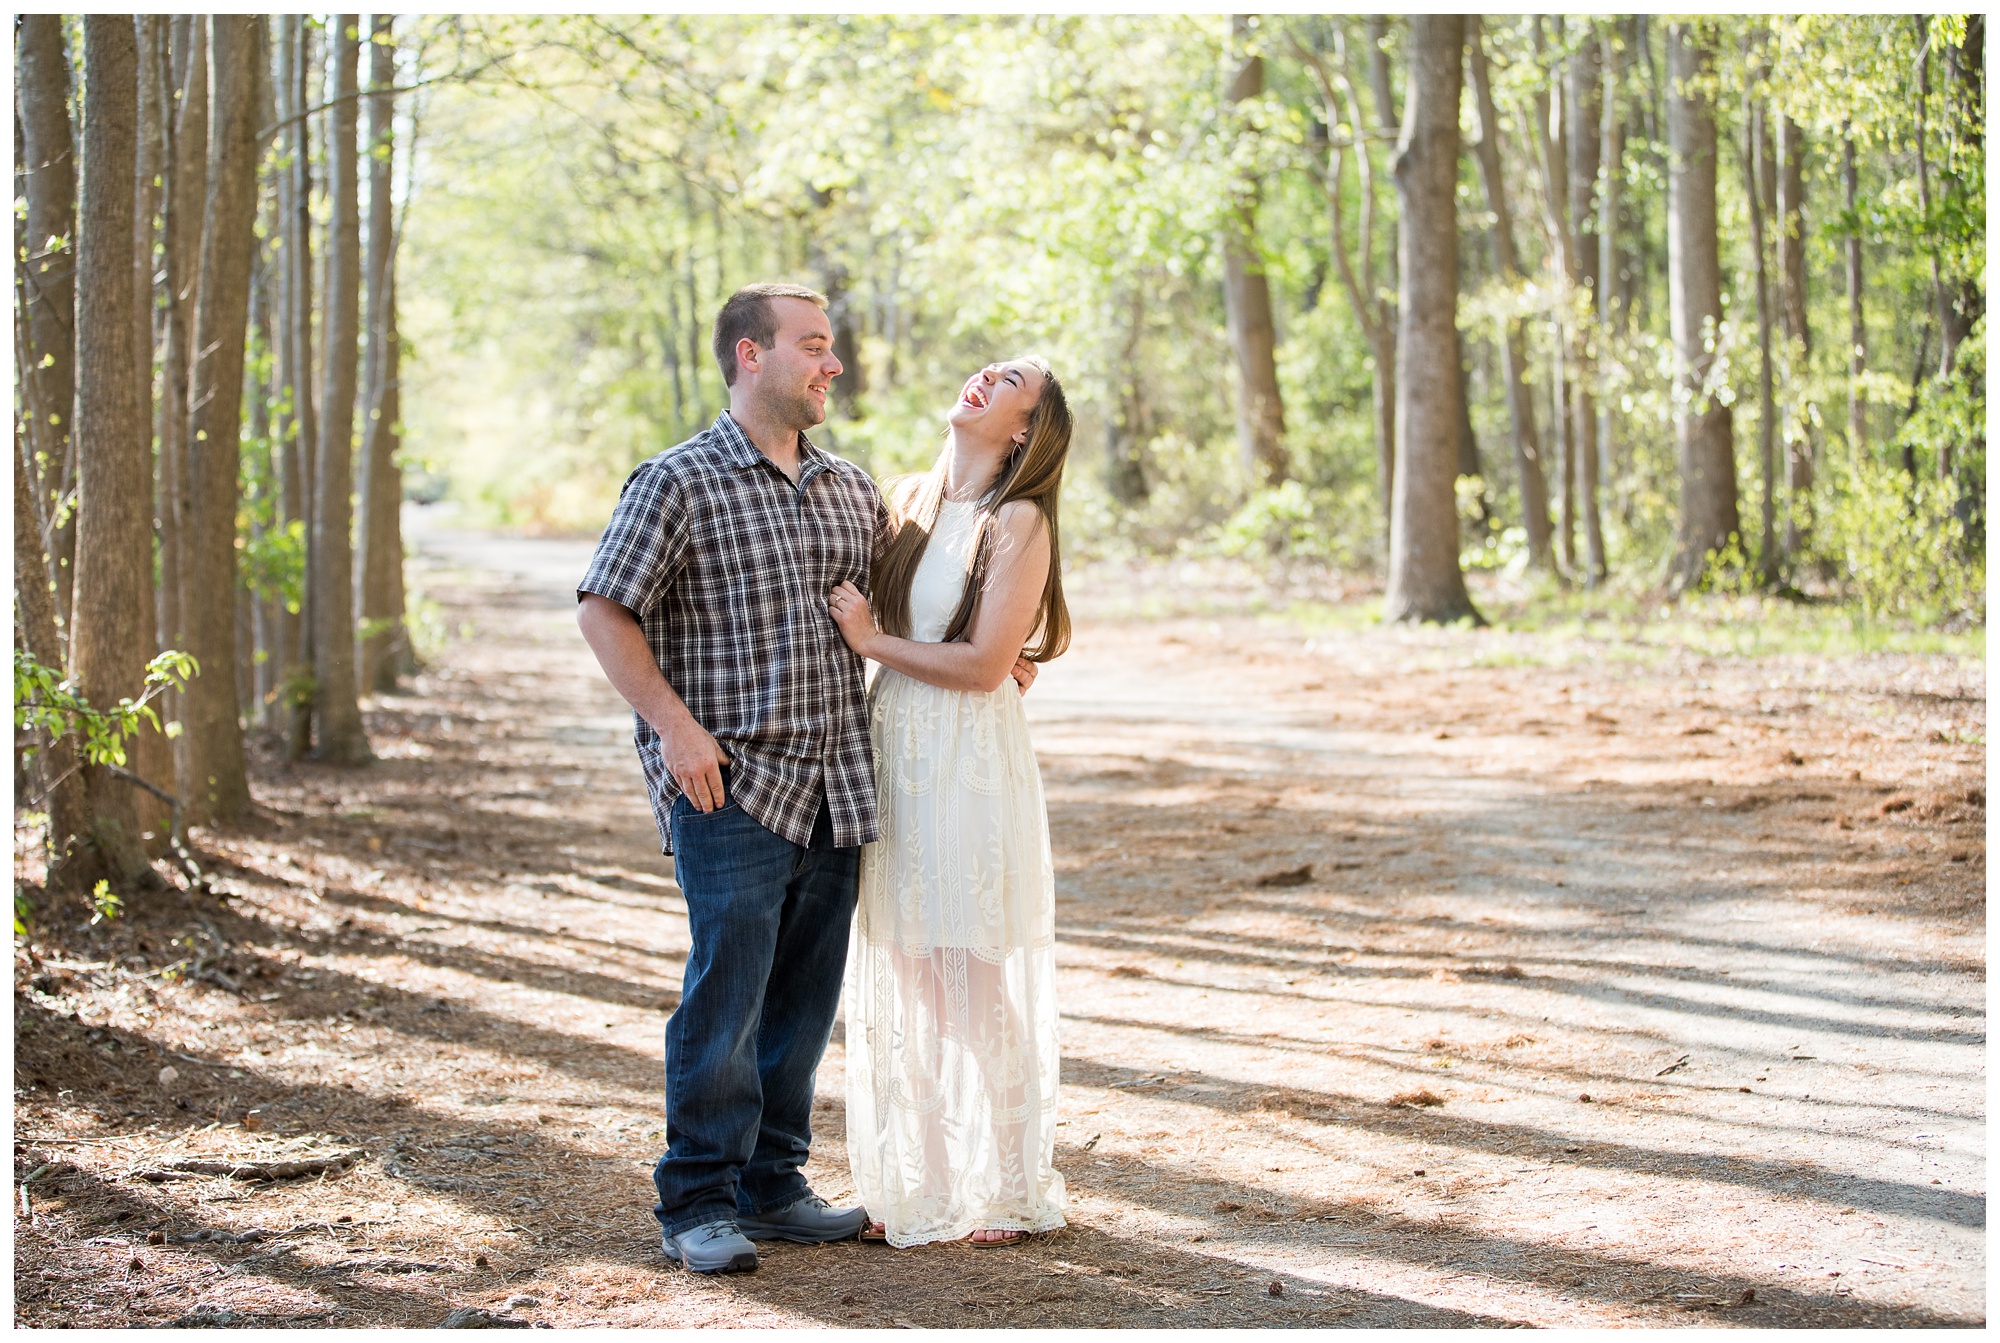 Courtney & Michael | Oak Grove Lake Park Engagement session